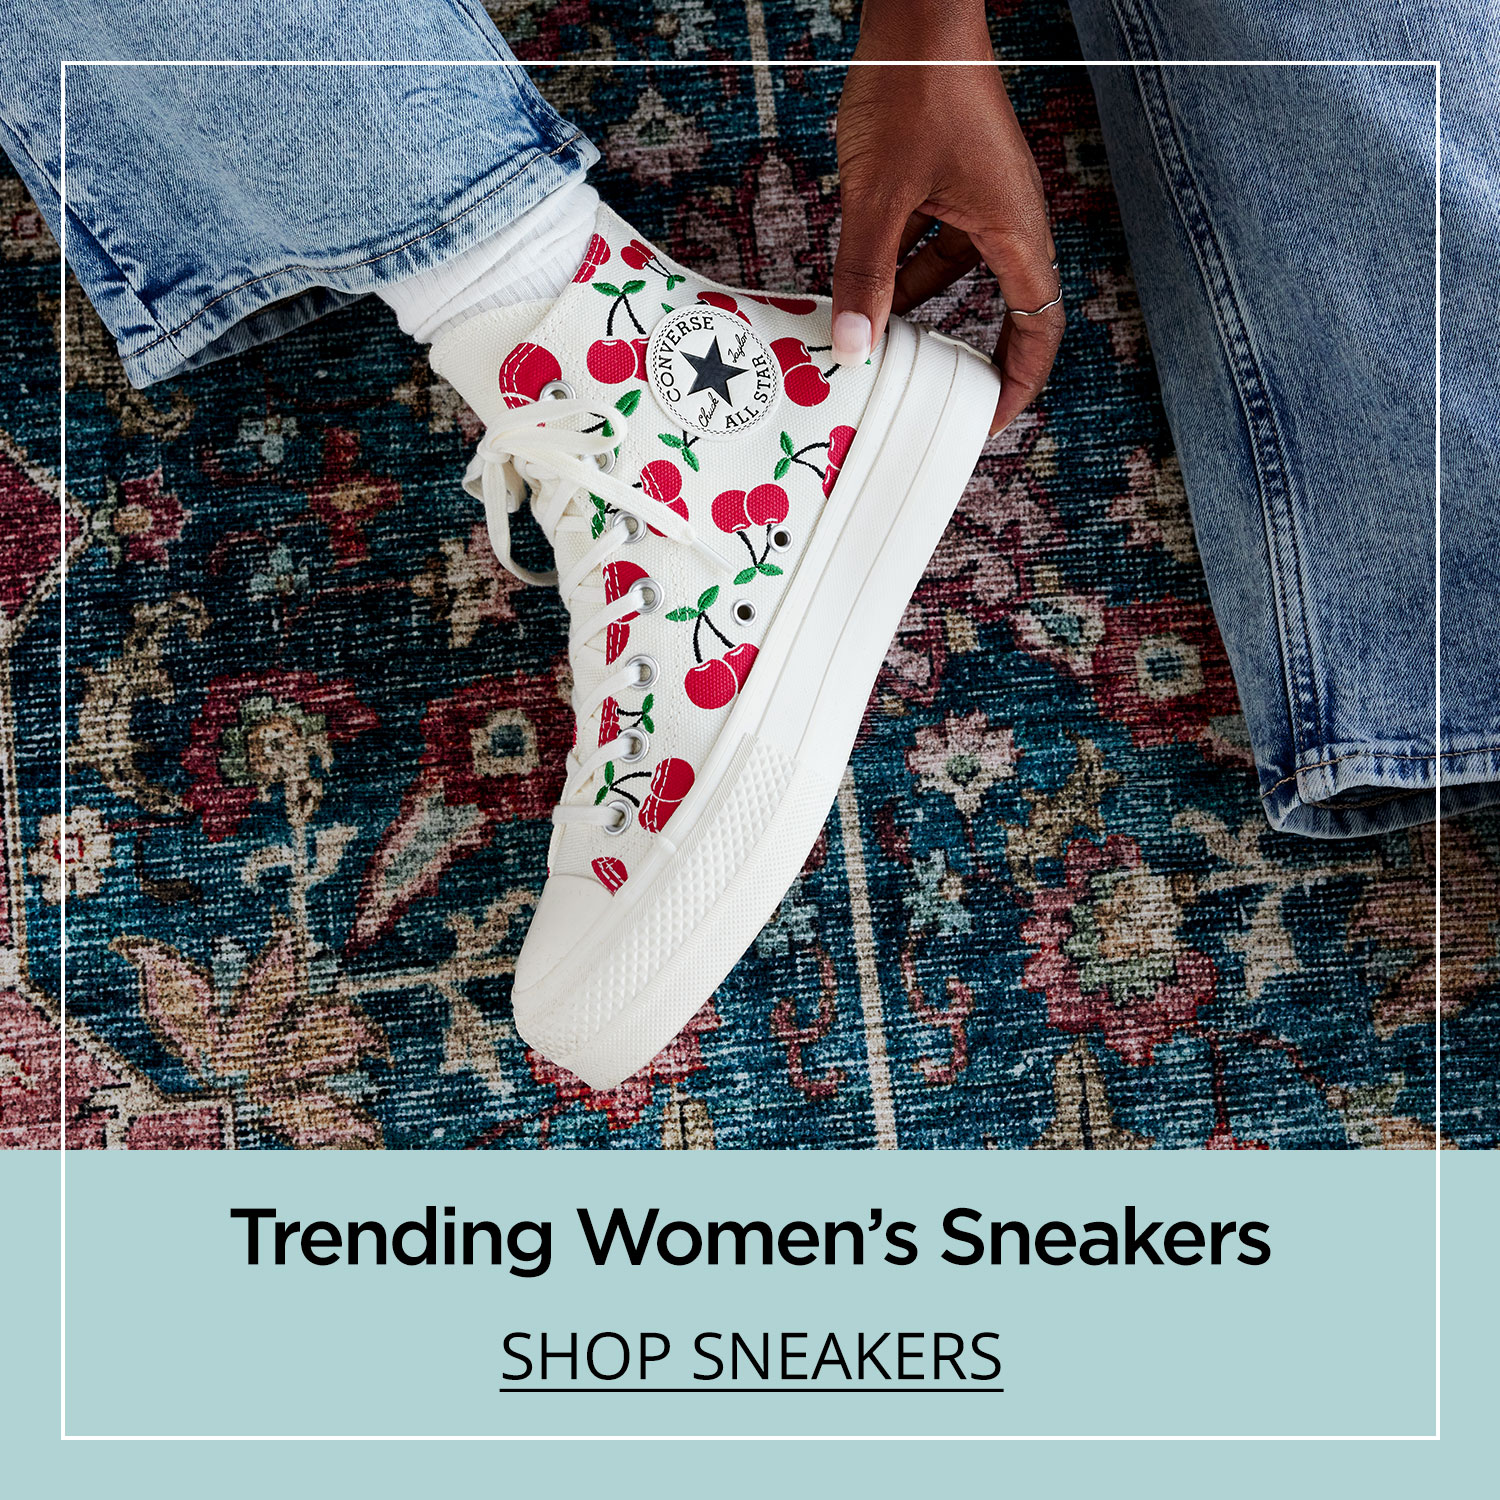 Converse Chuck Taylor All Star High Top Women's Platform Sneakers